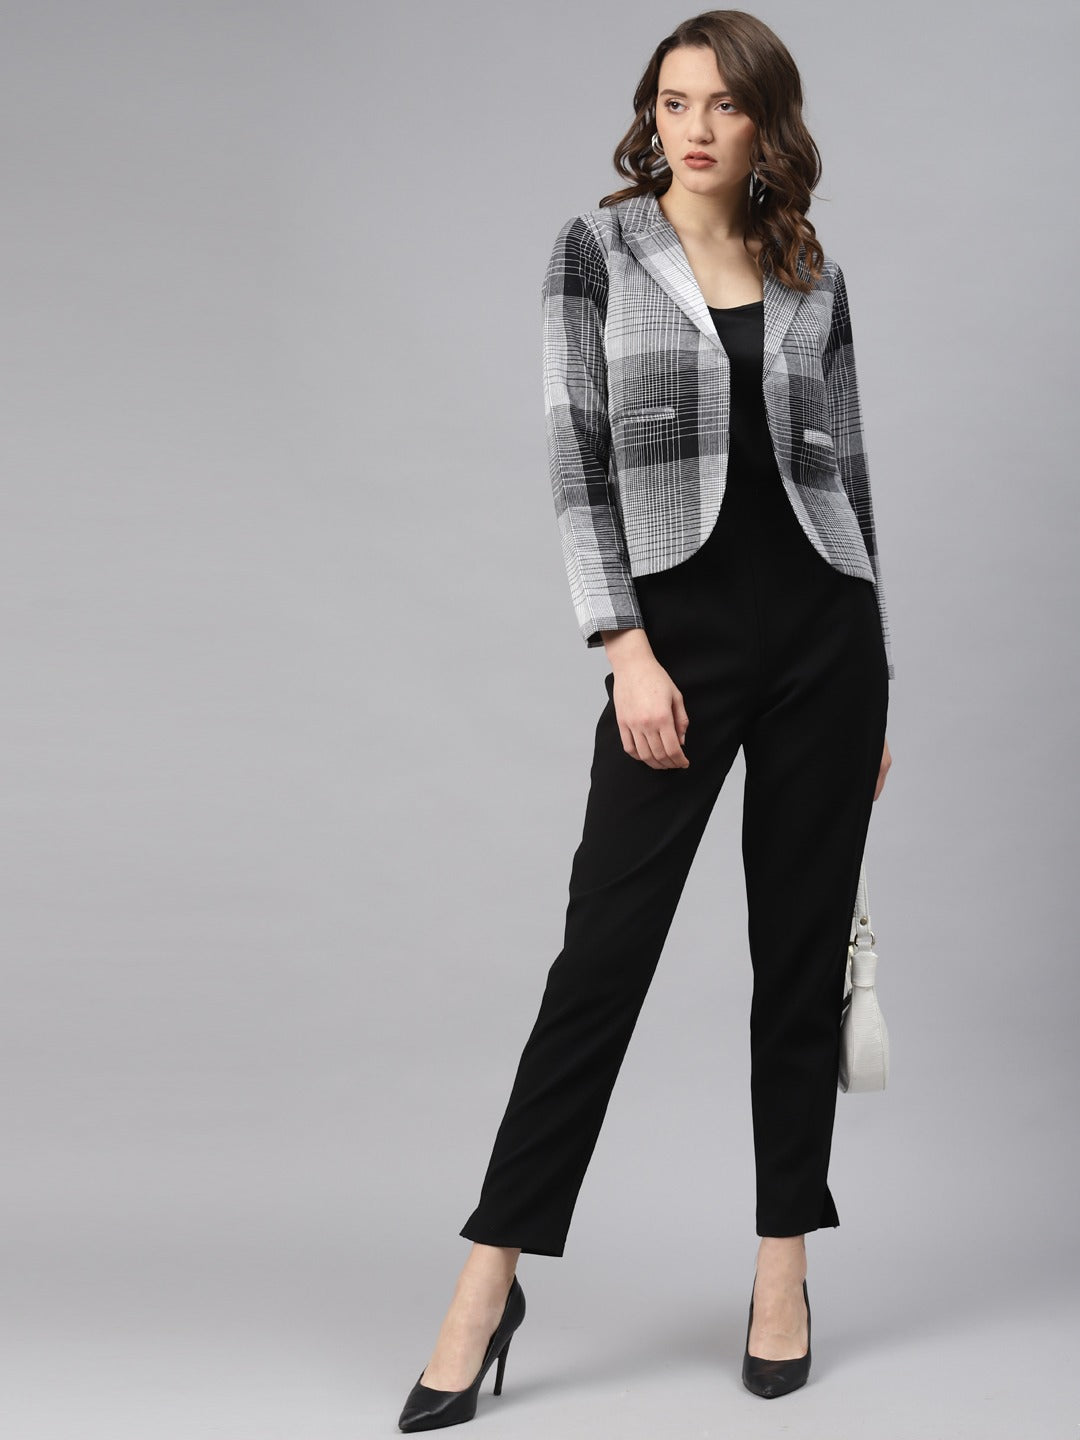 Cottinfab Women Grey & Black Checked Cotton Front Open Blazer